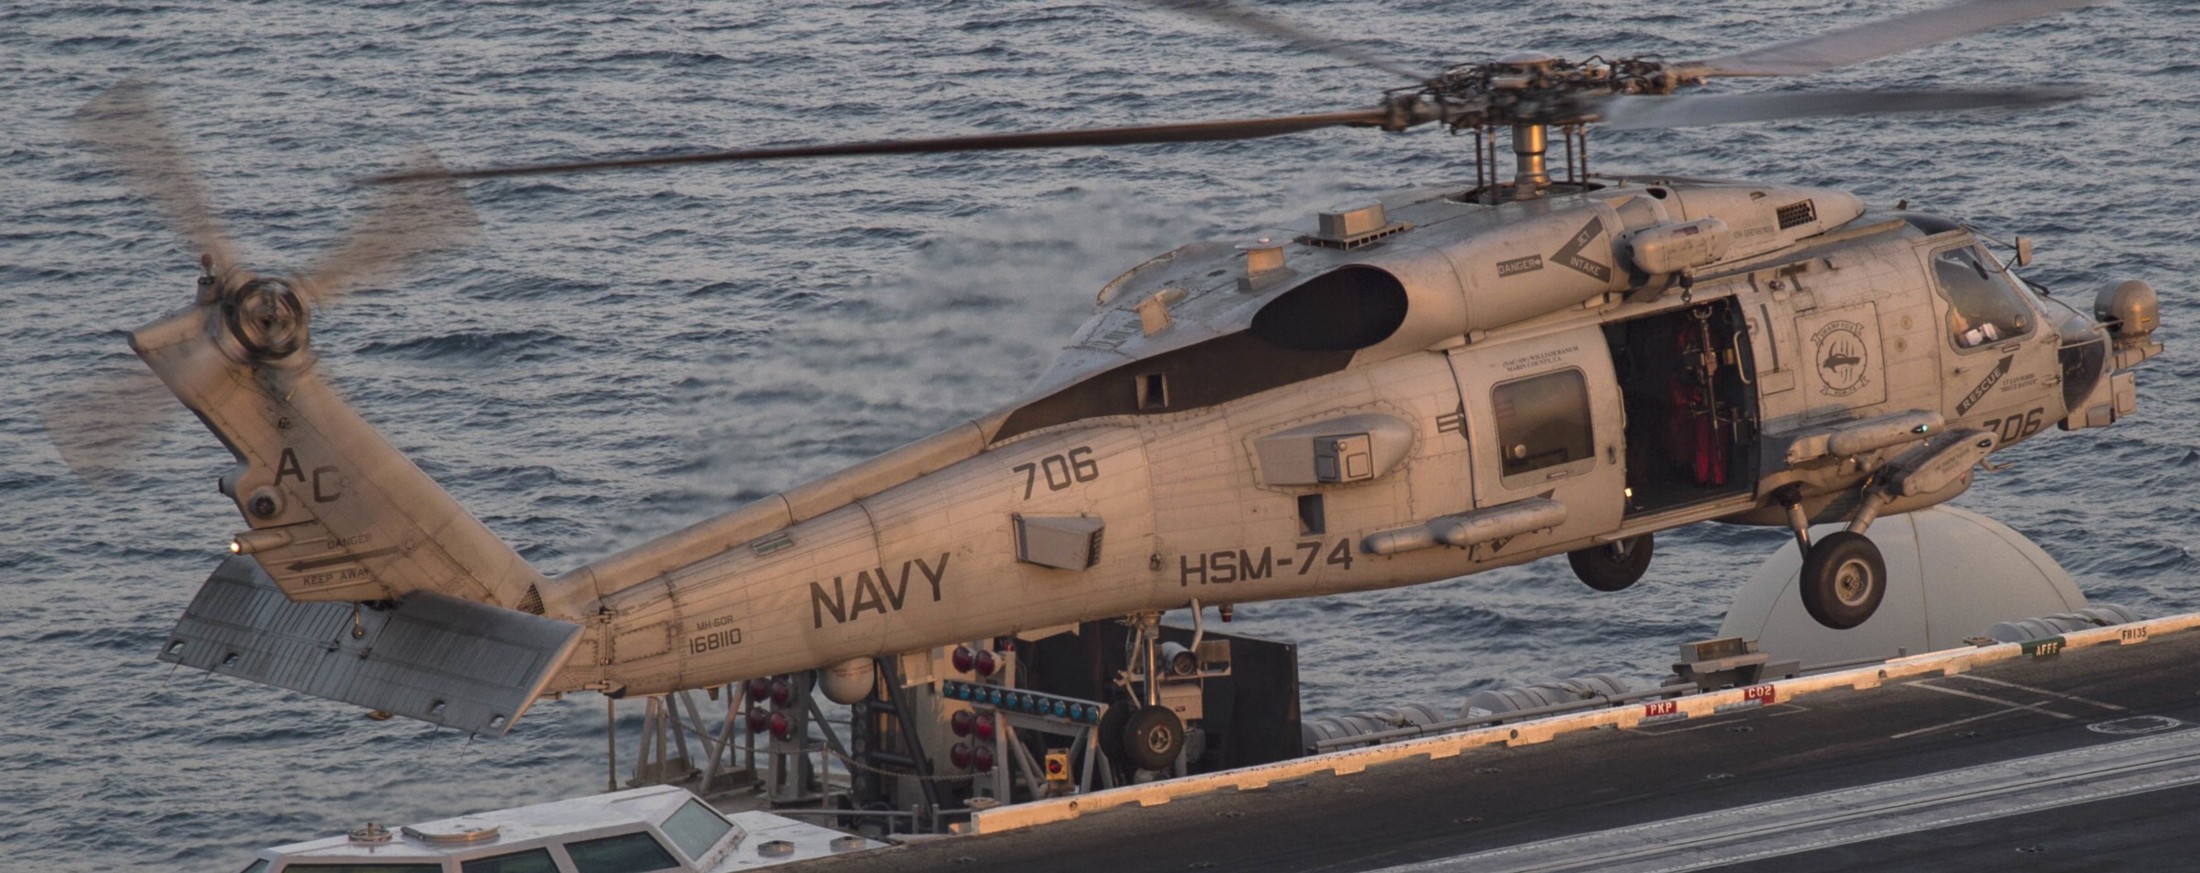 hsm-74 swamp foxes helicopter maritime strike squadron us navy mh-60r seahawk 2016 55 uss dwight d. eisenhower cvn-69 cvw-3